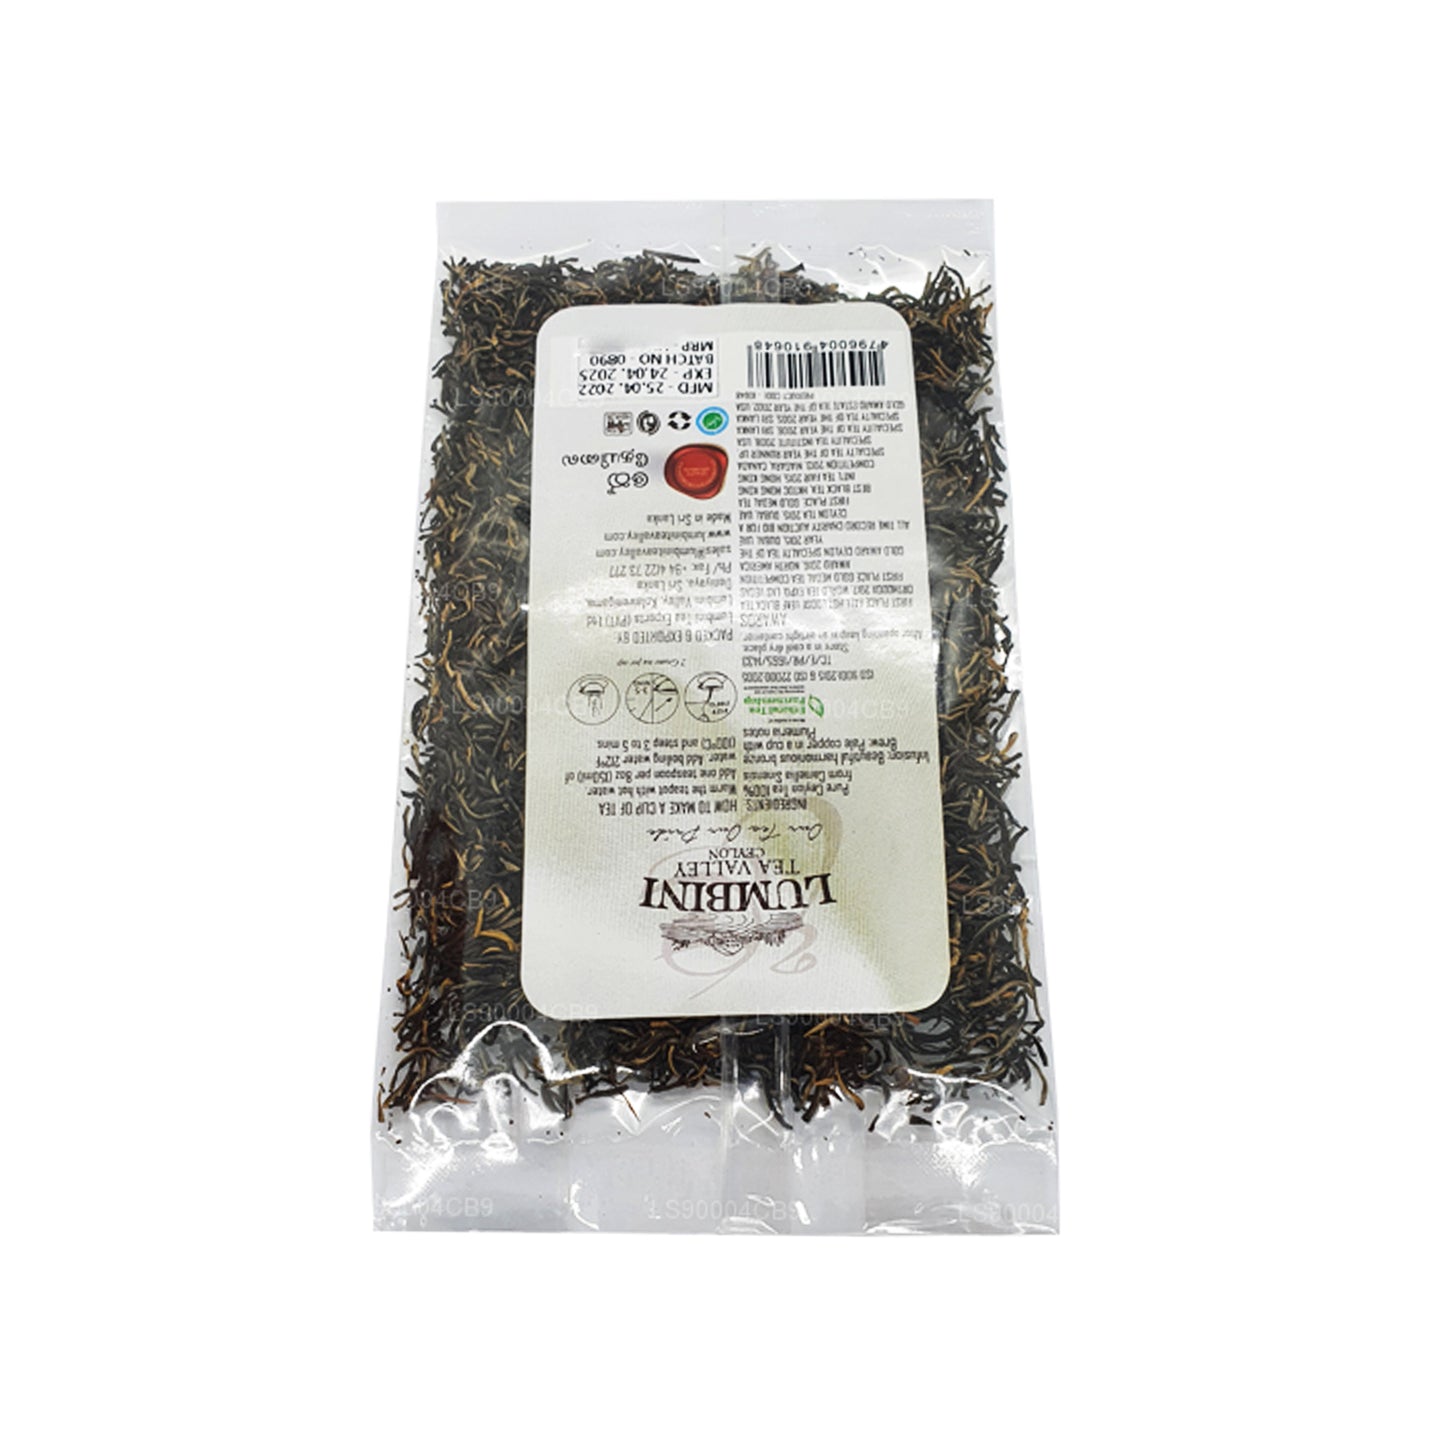 Lumbini Sinharaja Wiry Tips (FBOPF EX SP) Grade Black Tea (25g)